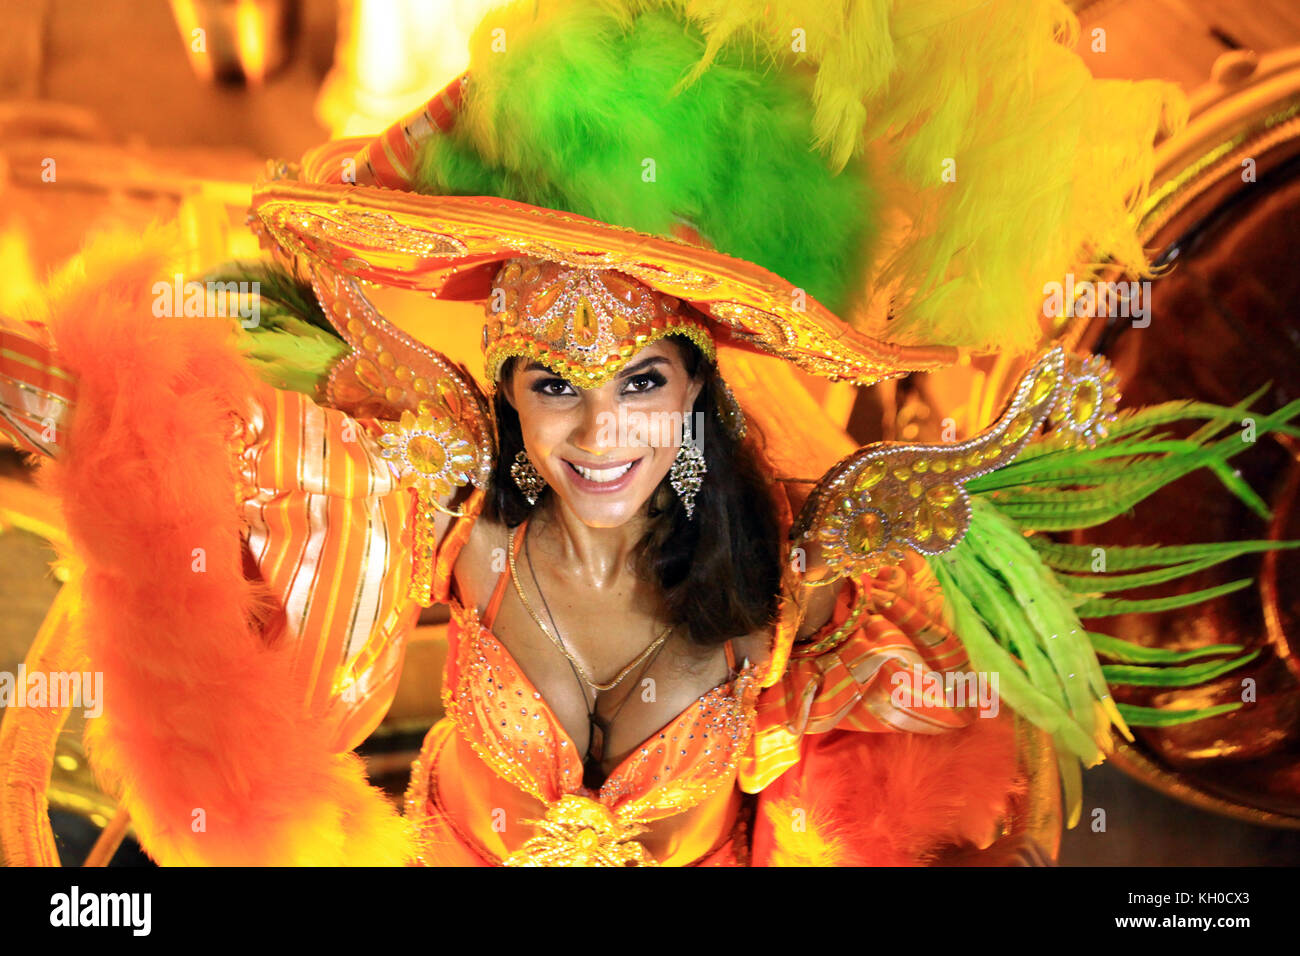 Samba dancer brazil hi-res stock photography and images - Alamy